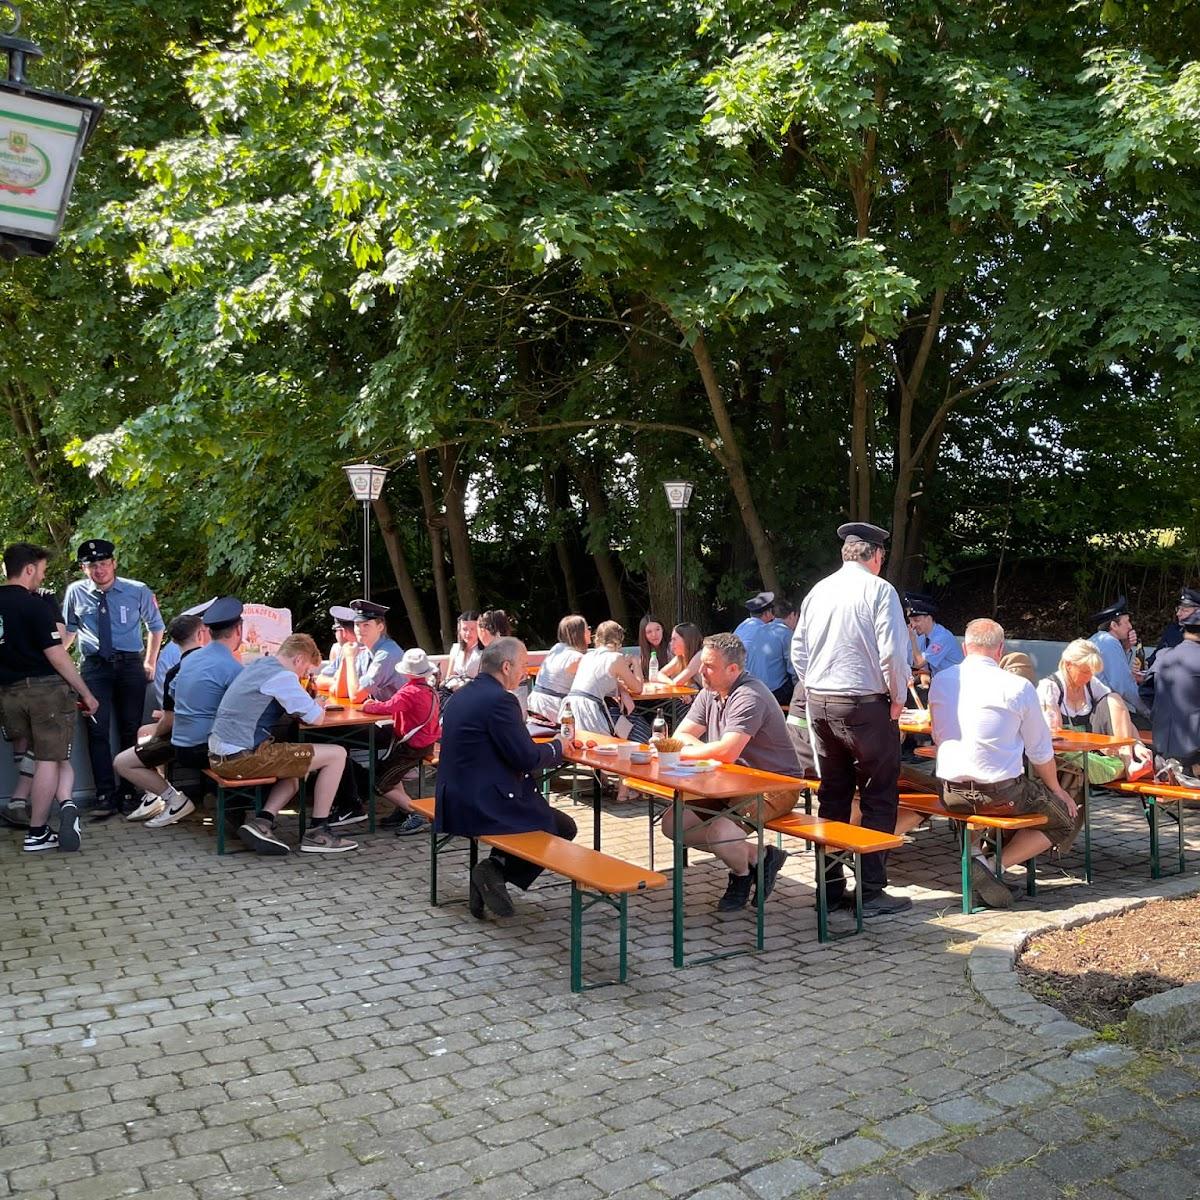 Restaurant "Masel Restaurant Cafe" in Bayerbach bei Ergoldsbach